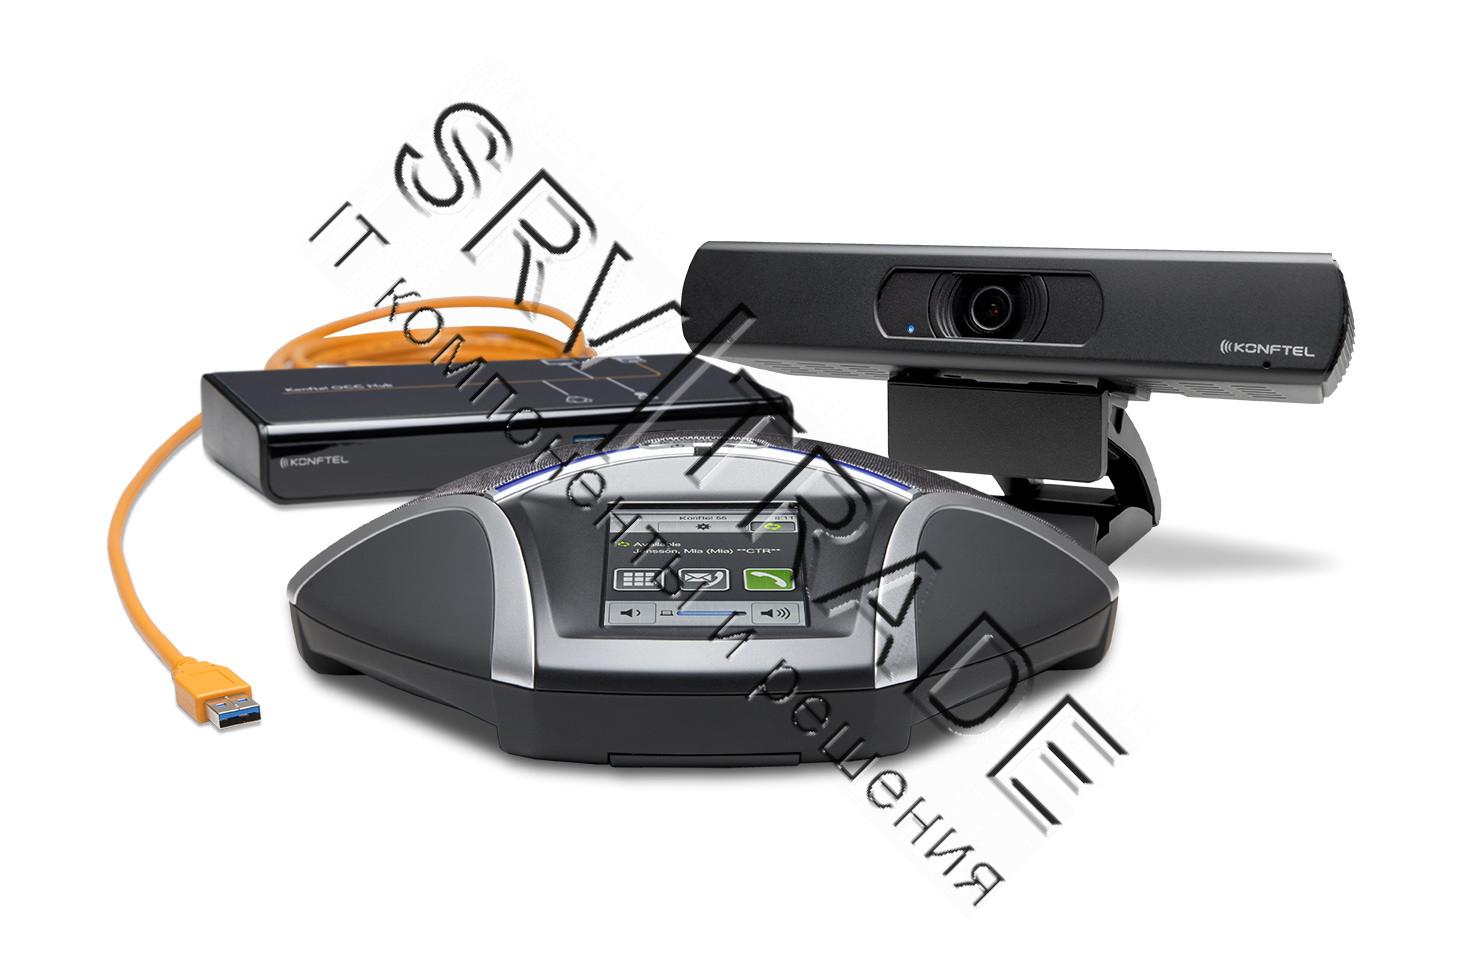 Комплект для видеоконференцсвязи Konftel C5055Wx (55Wx + Cam50 + HUB), Konftel KT-C5055Wx